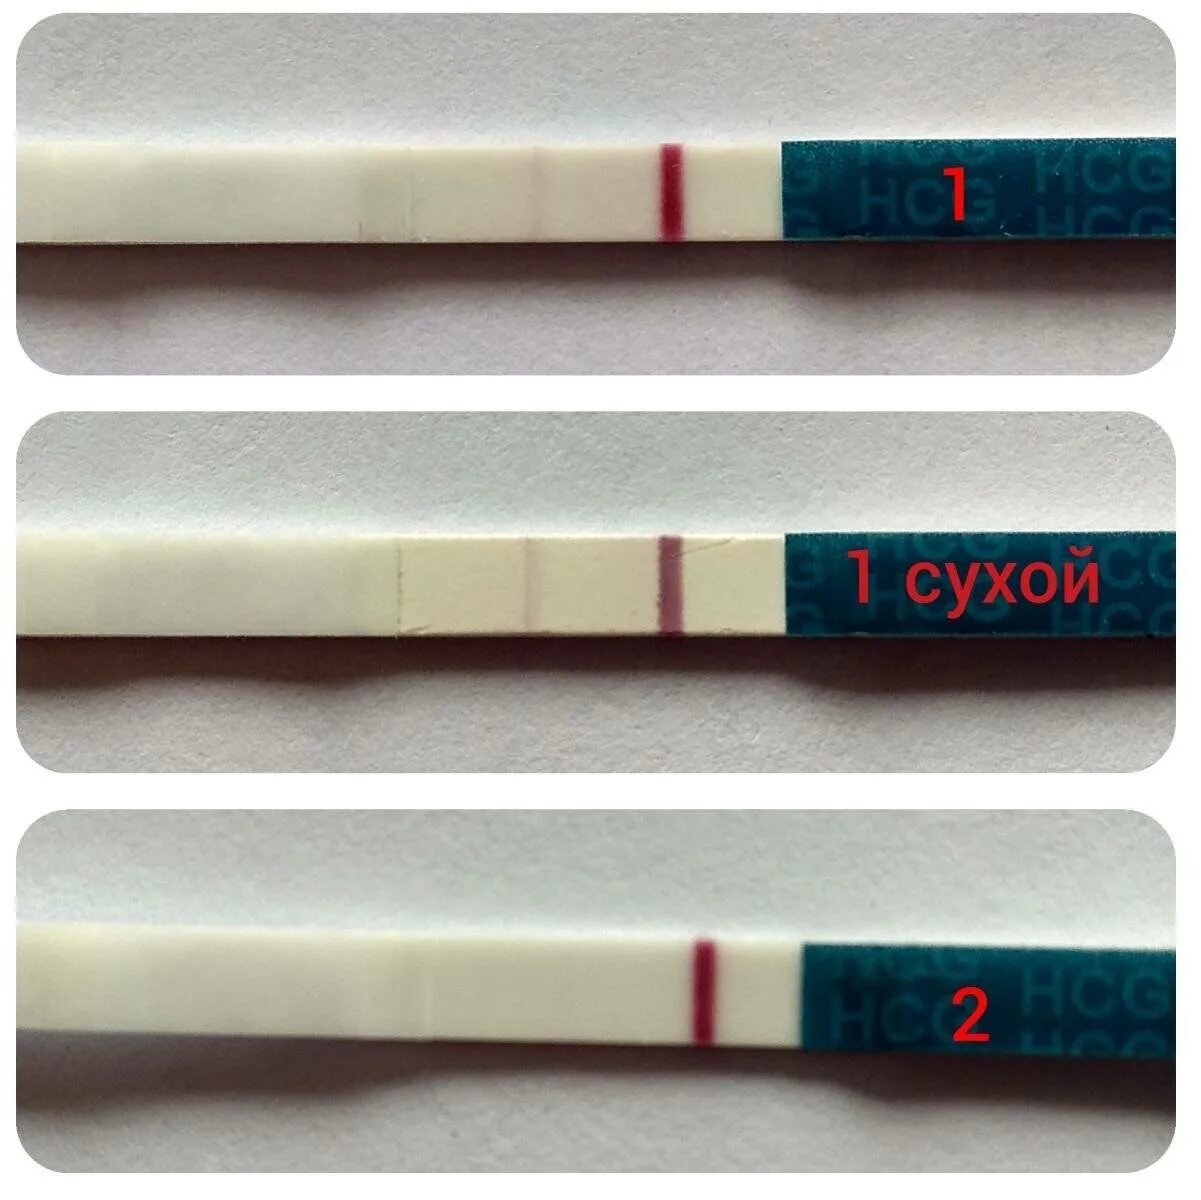 На тесте исчезли полоски на беременность. Реагент тест на беременность. Тест фраутест с 2 тест полосками. Тест на беременность одна полоска вторая реагент. Тест на беременность HCG 2 полоски.